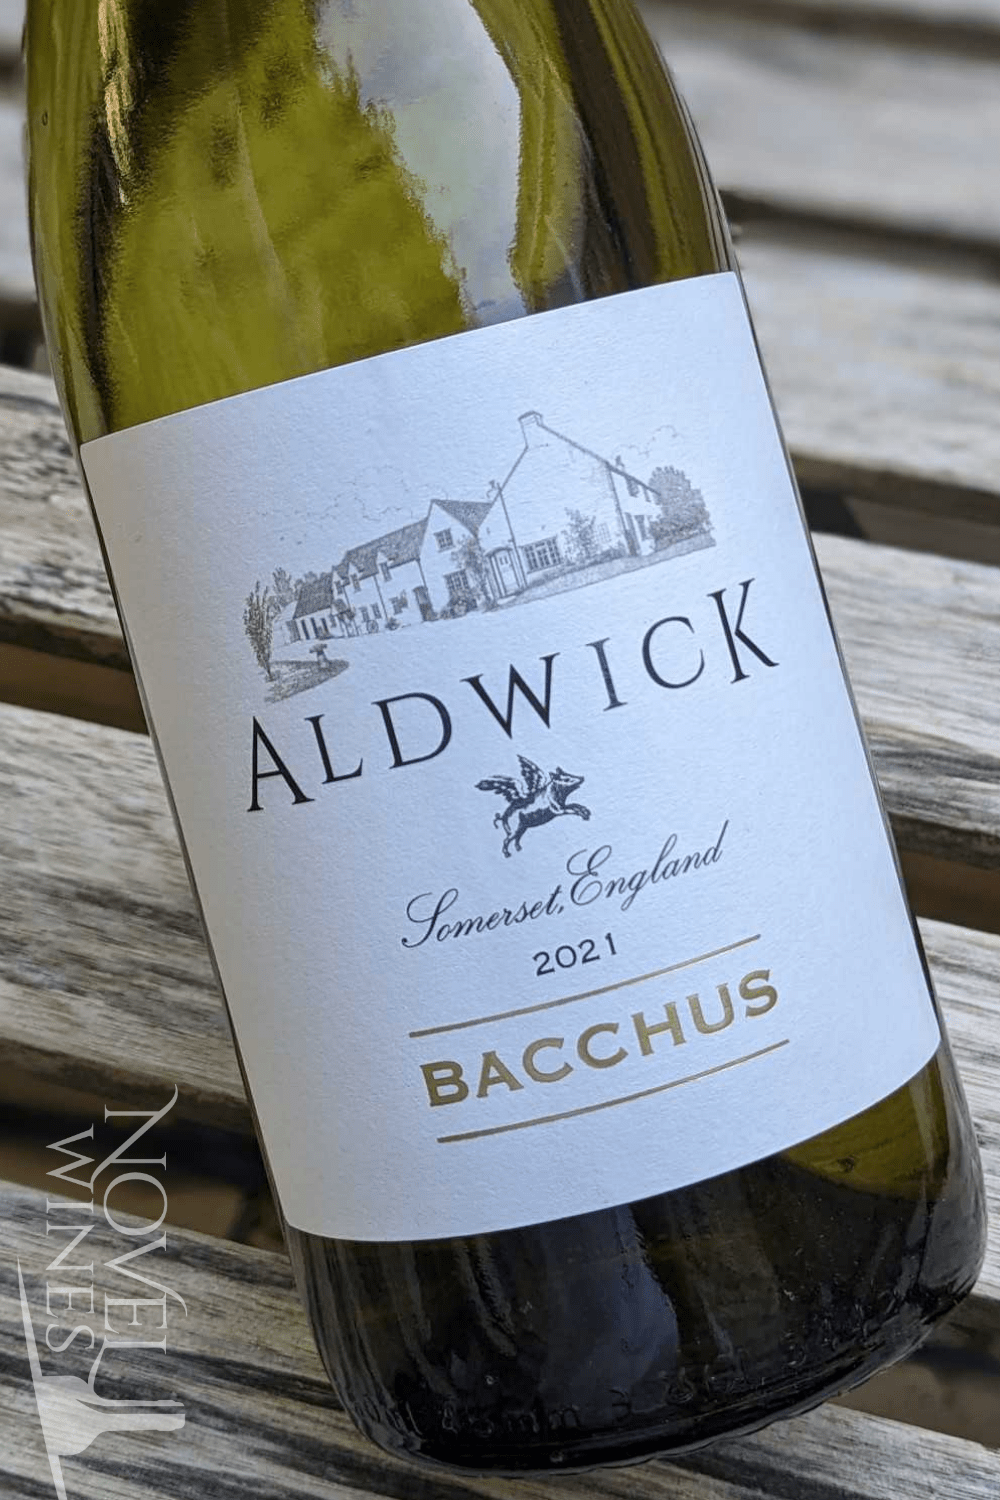 Aldwick Court Farm & Vineyard White Wine Aldwick Estate English Bacchus 2021, England